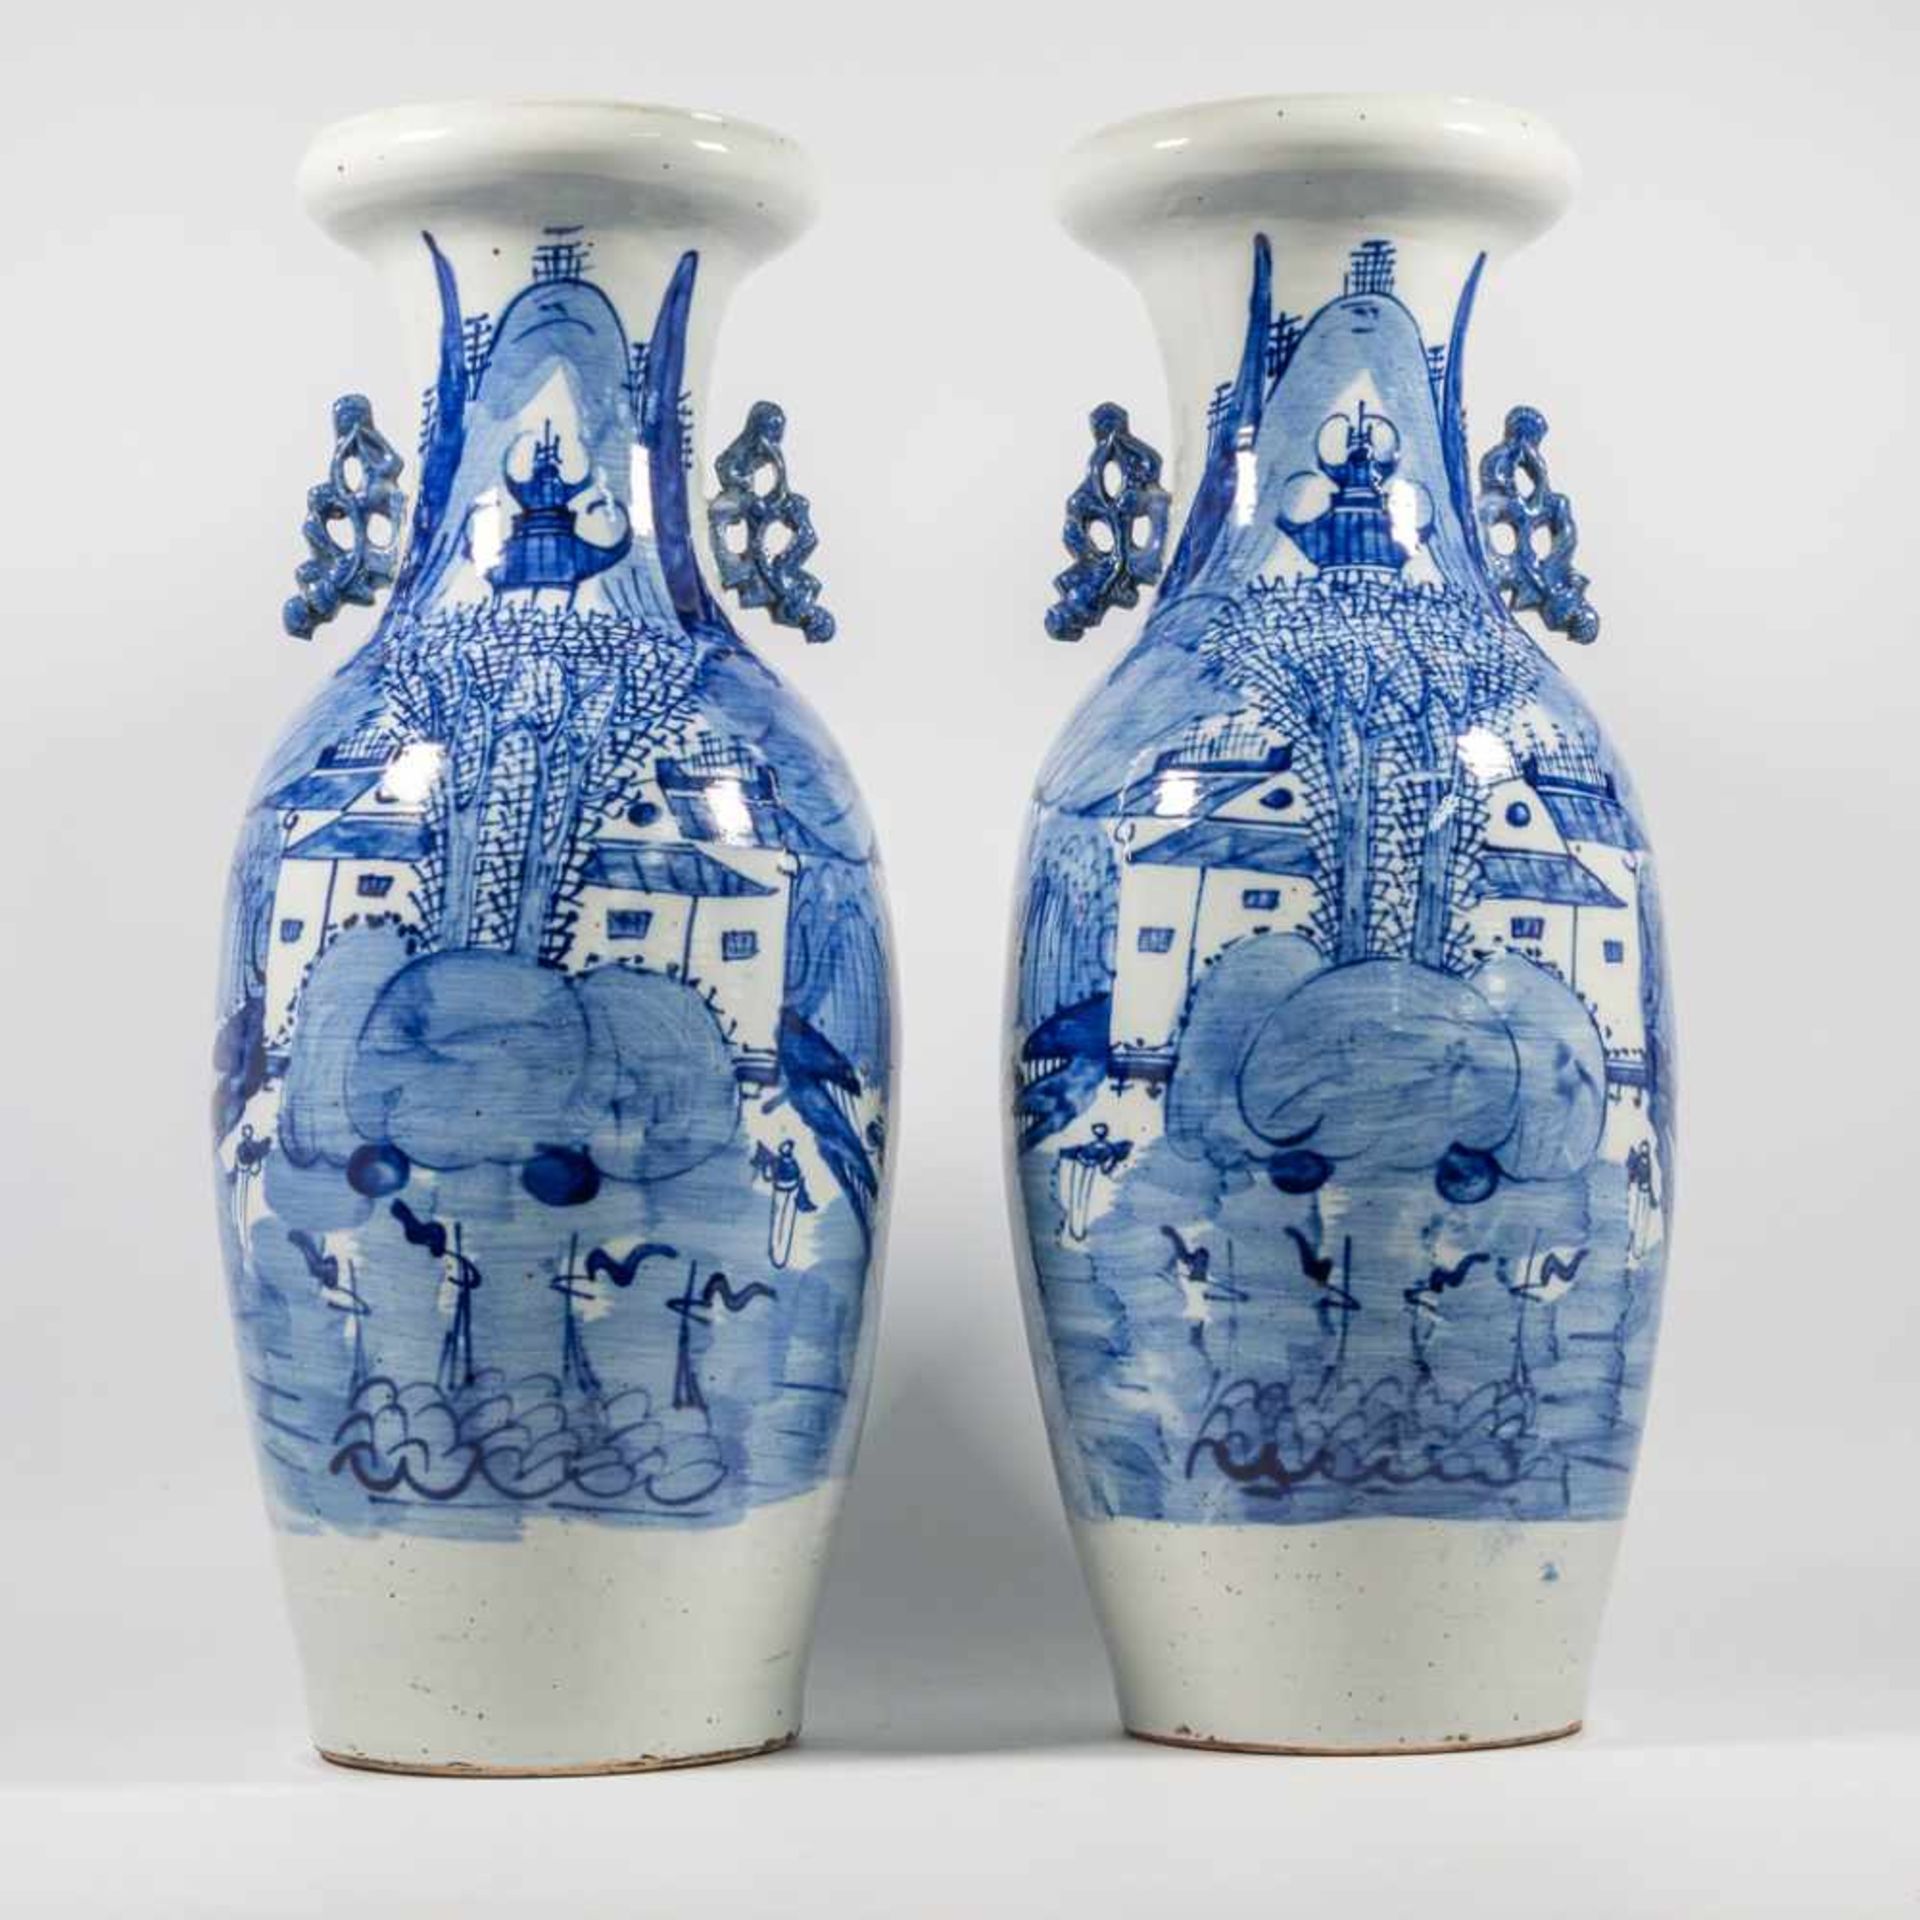 Pair of Chinese vases, blue white.